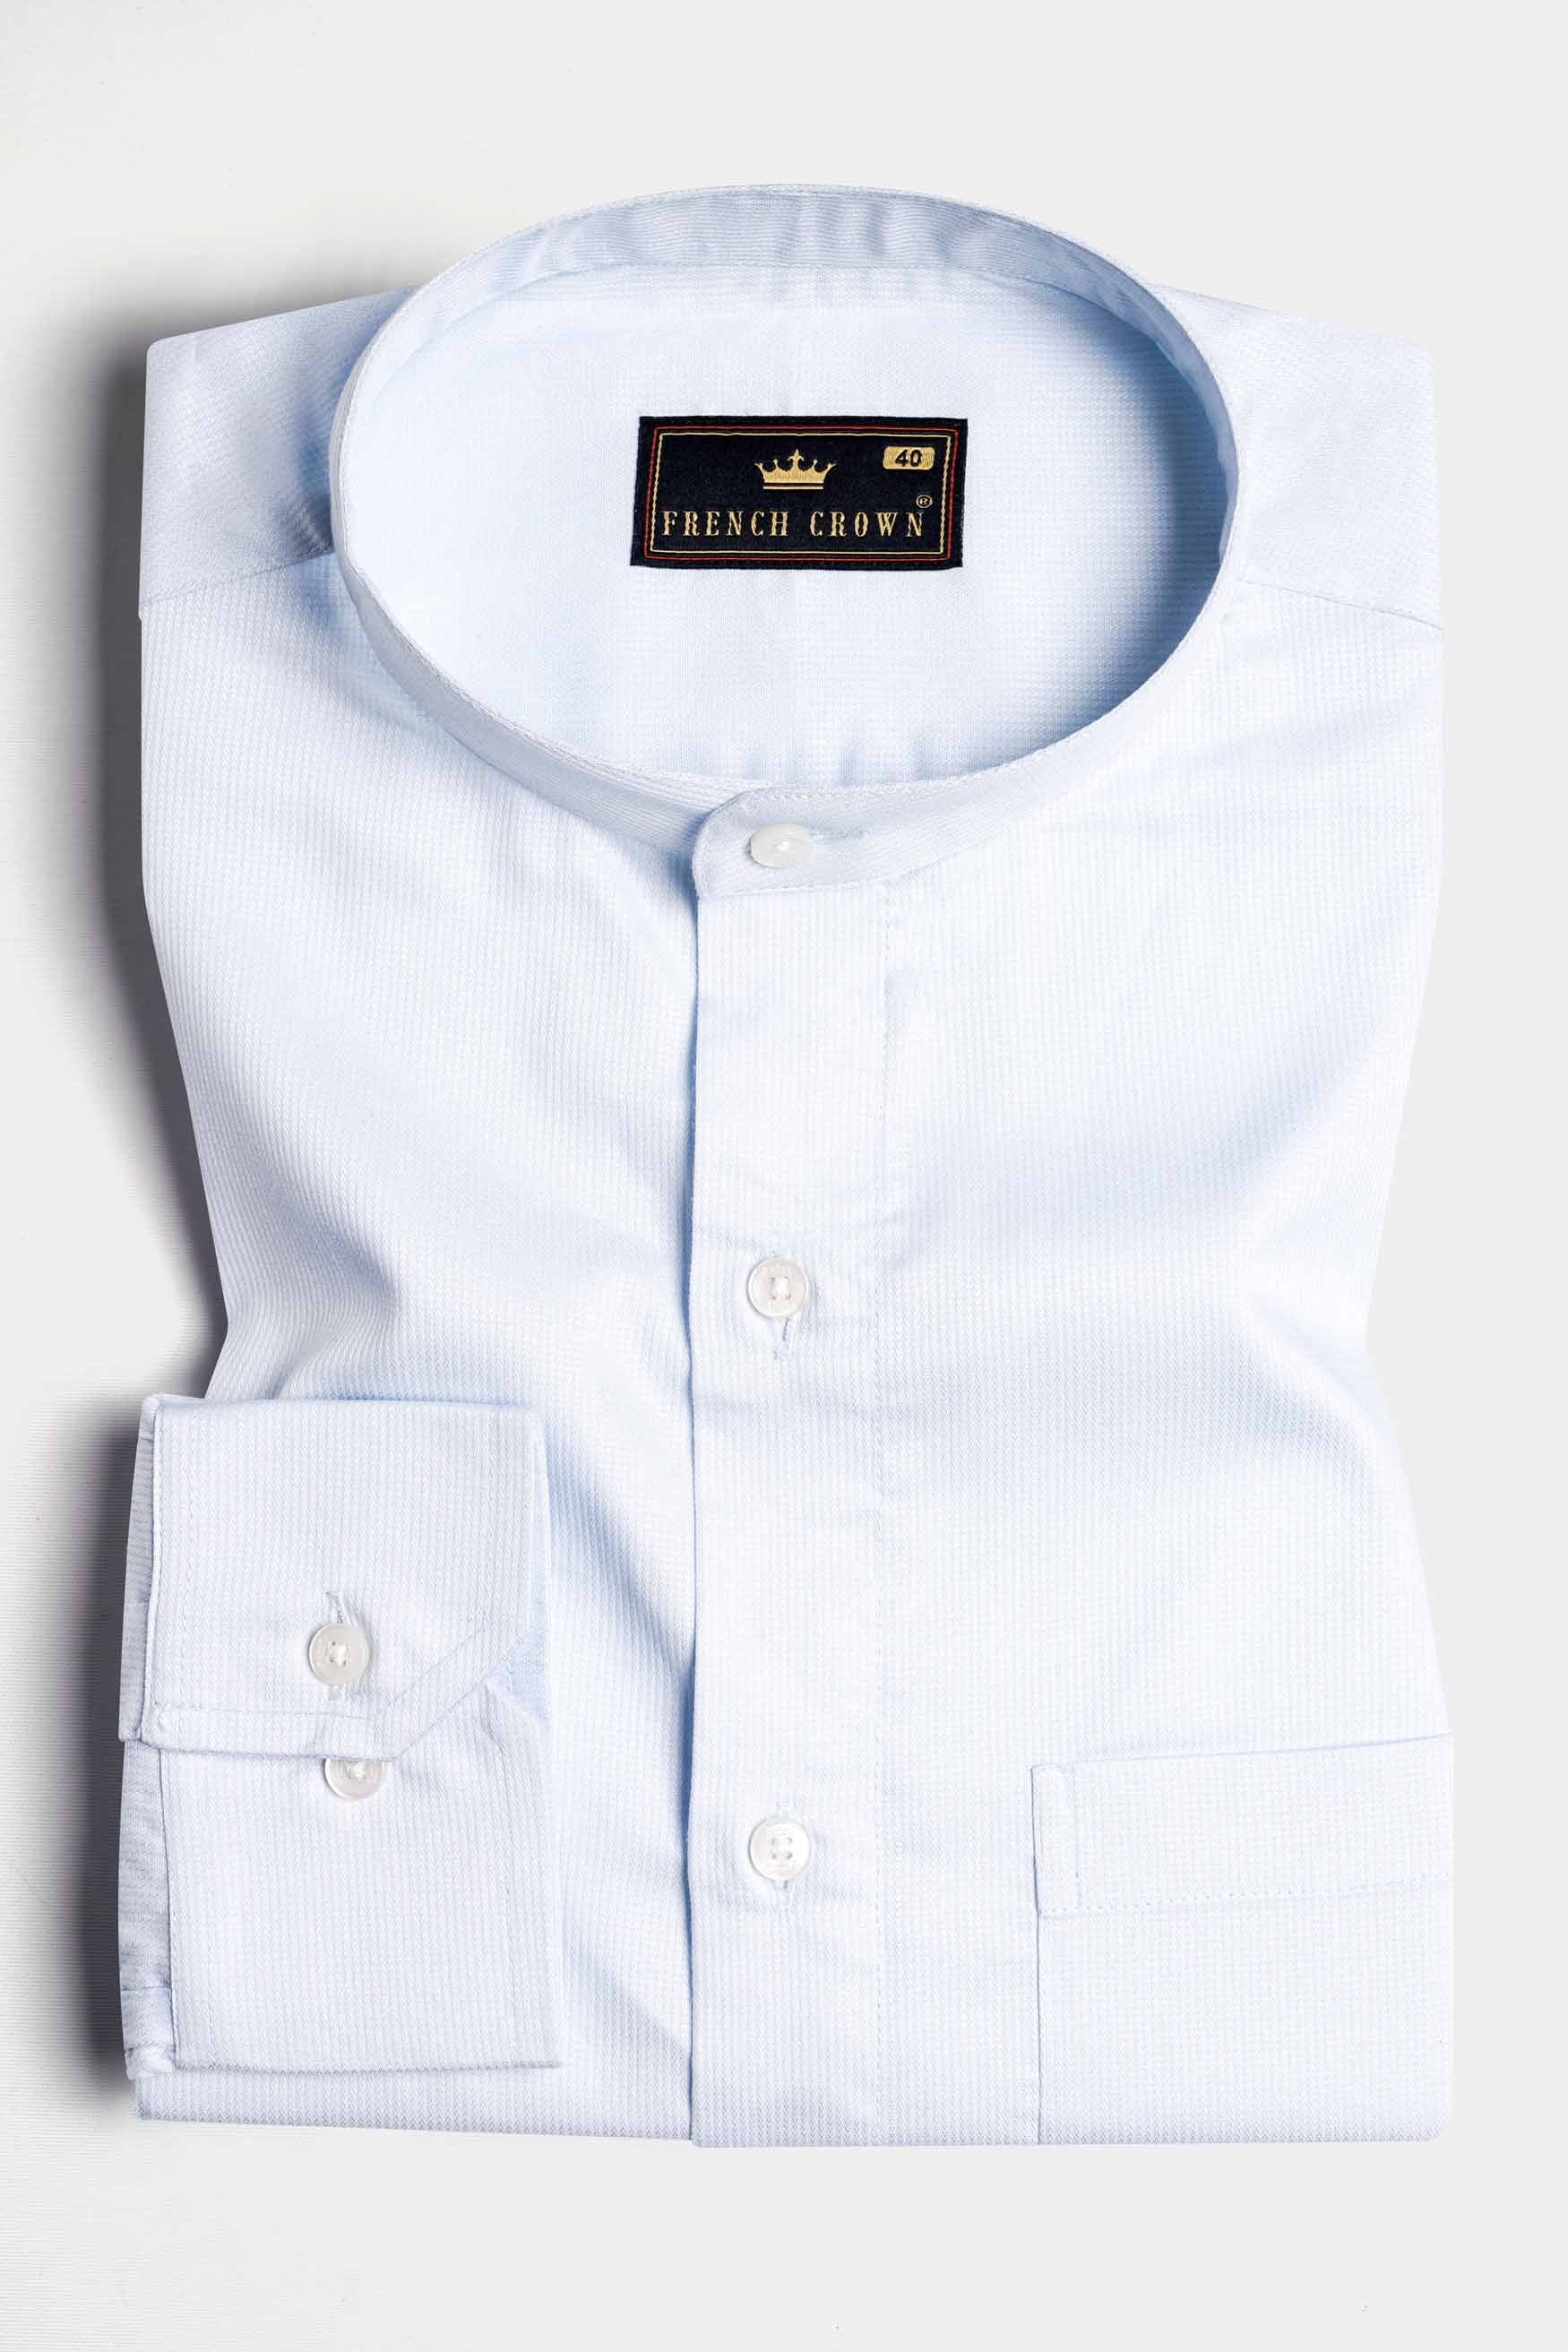 Aqua Blue Pinstriped  Dobby Textured Premium Giza Cotton Shirt